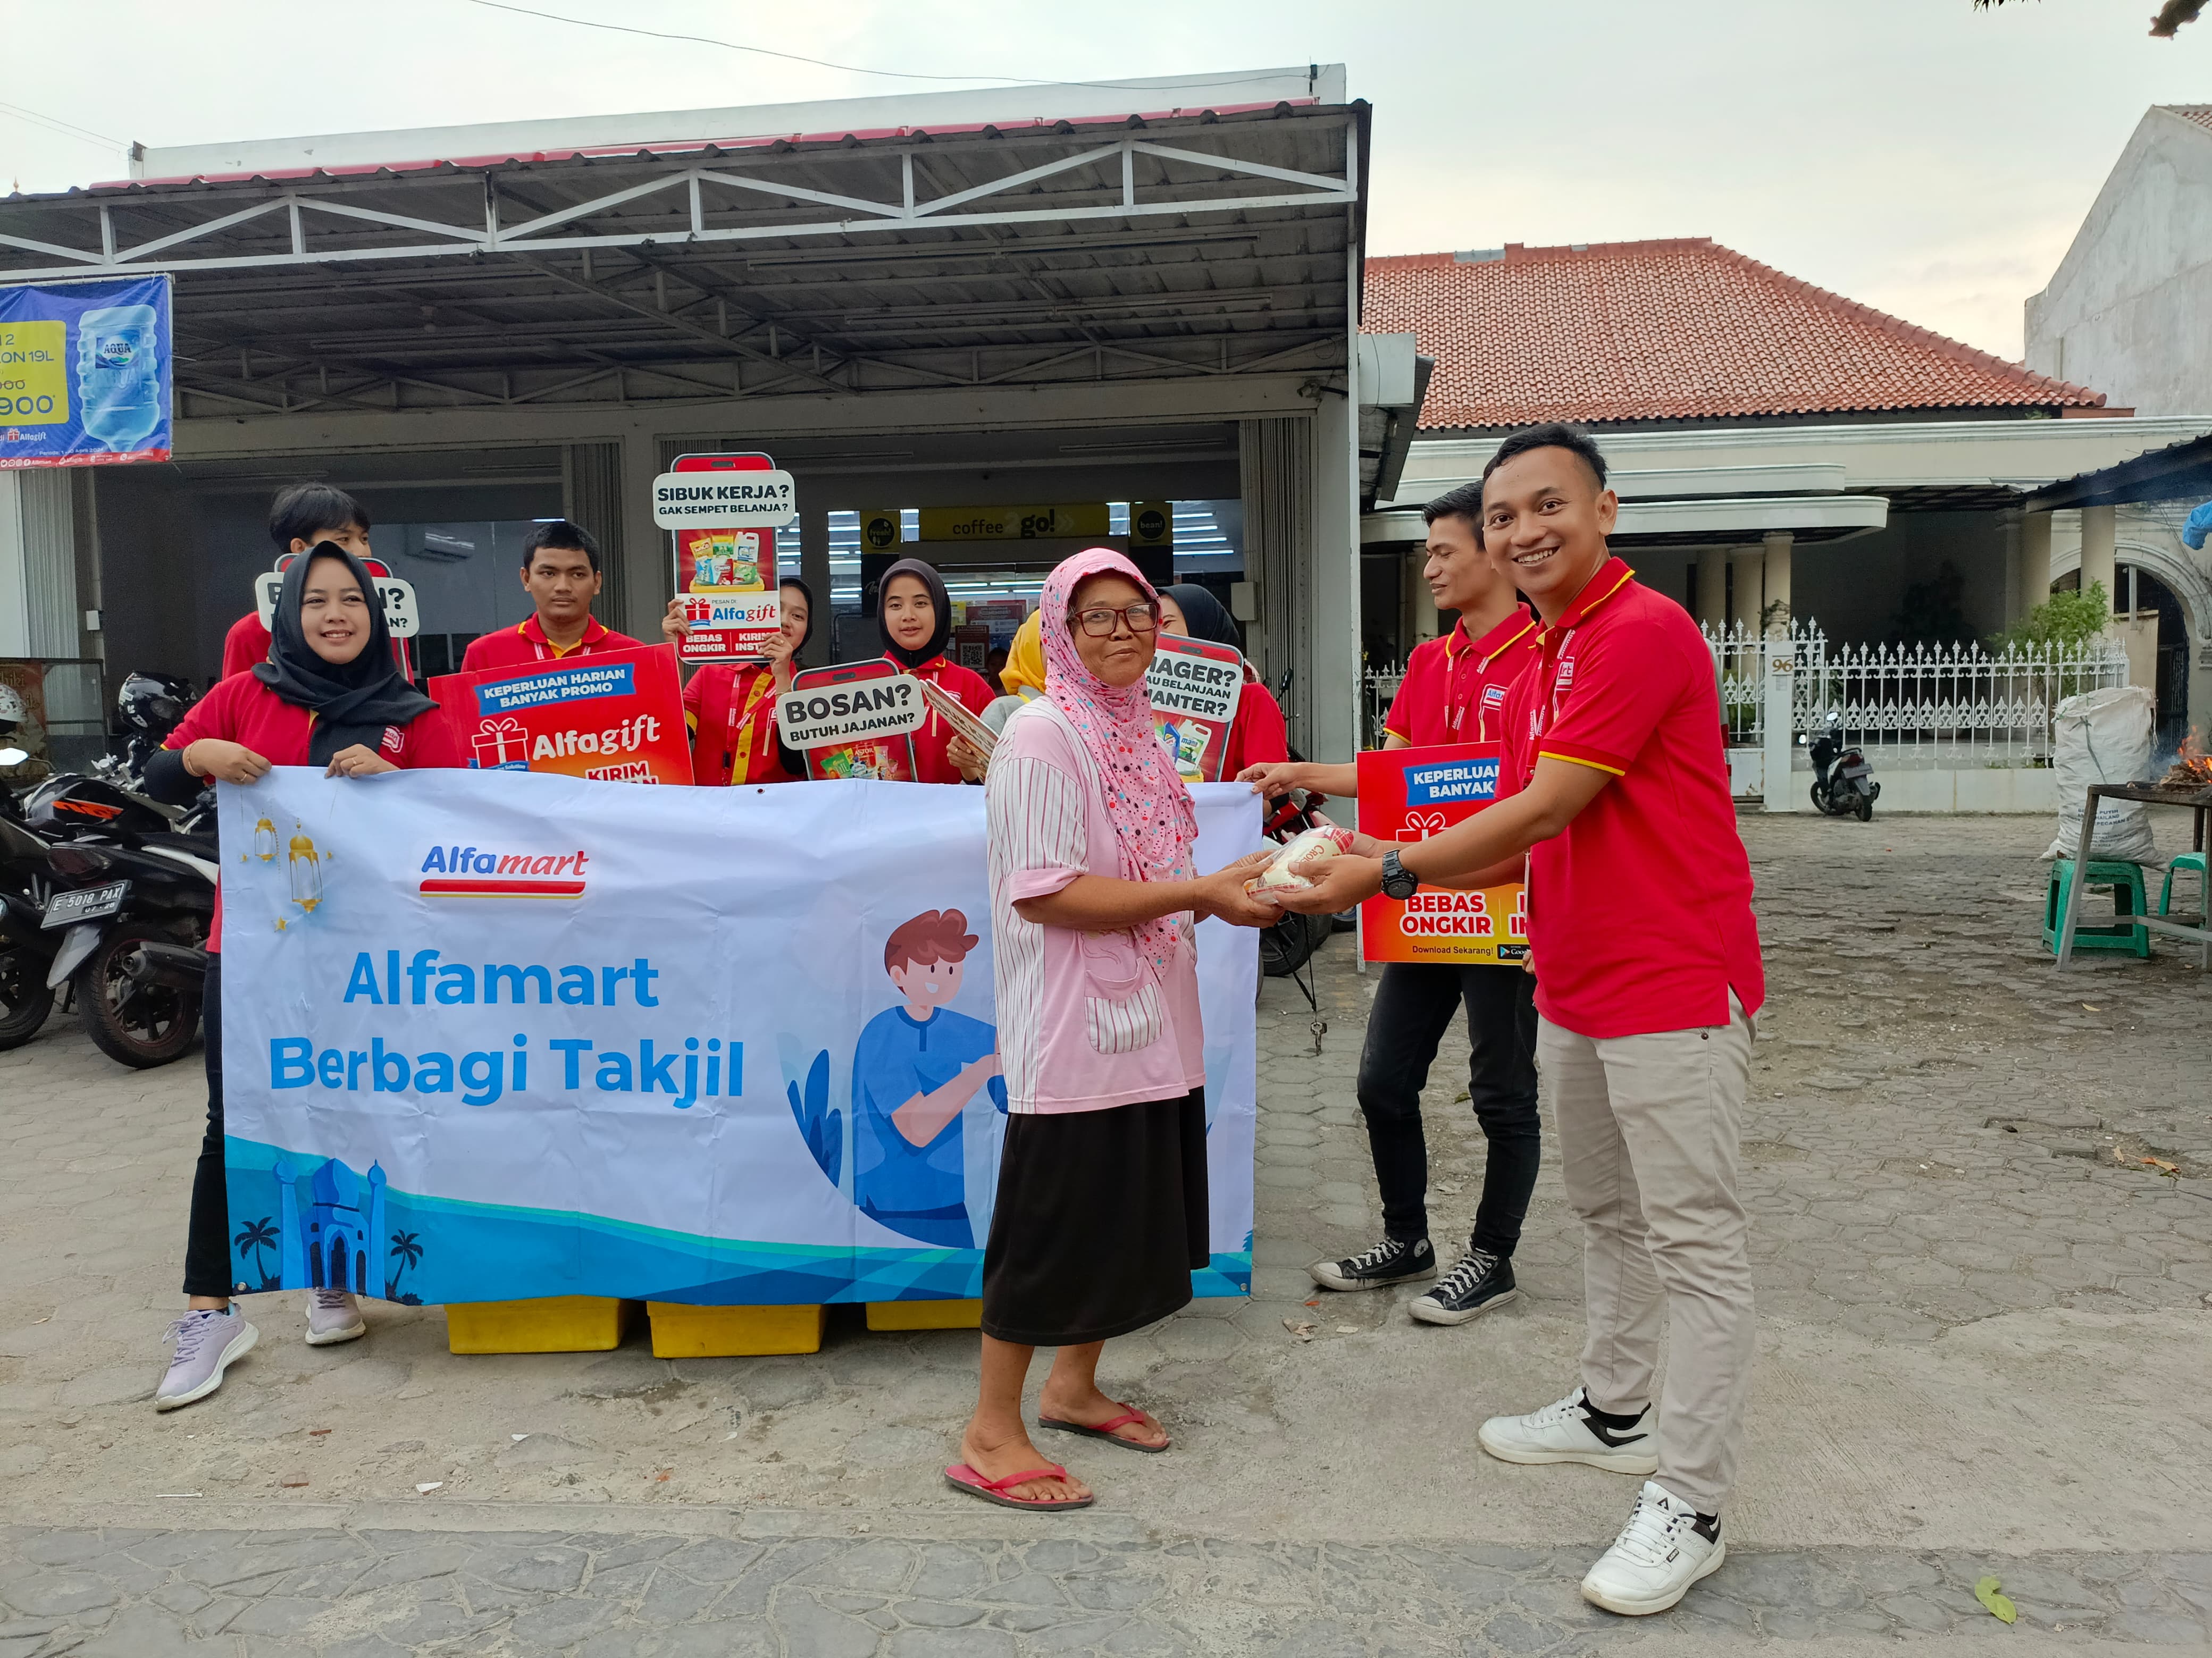 Alfamart Bagikan Ratusan Takjil untuk Pengendara di Jl Siliwangi Cirebon